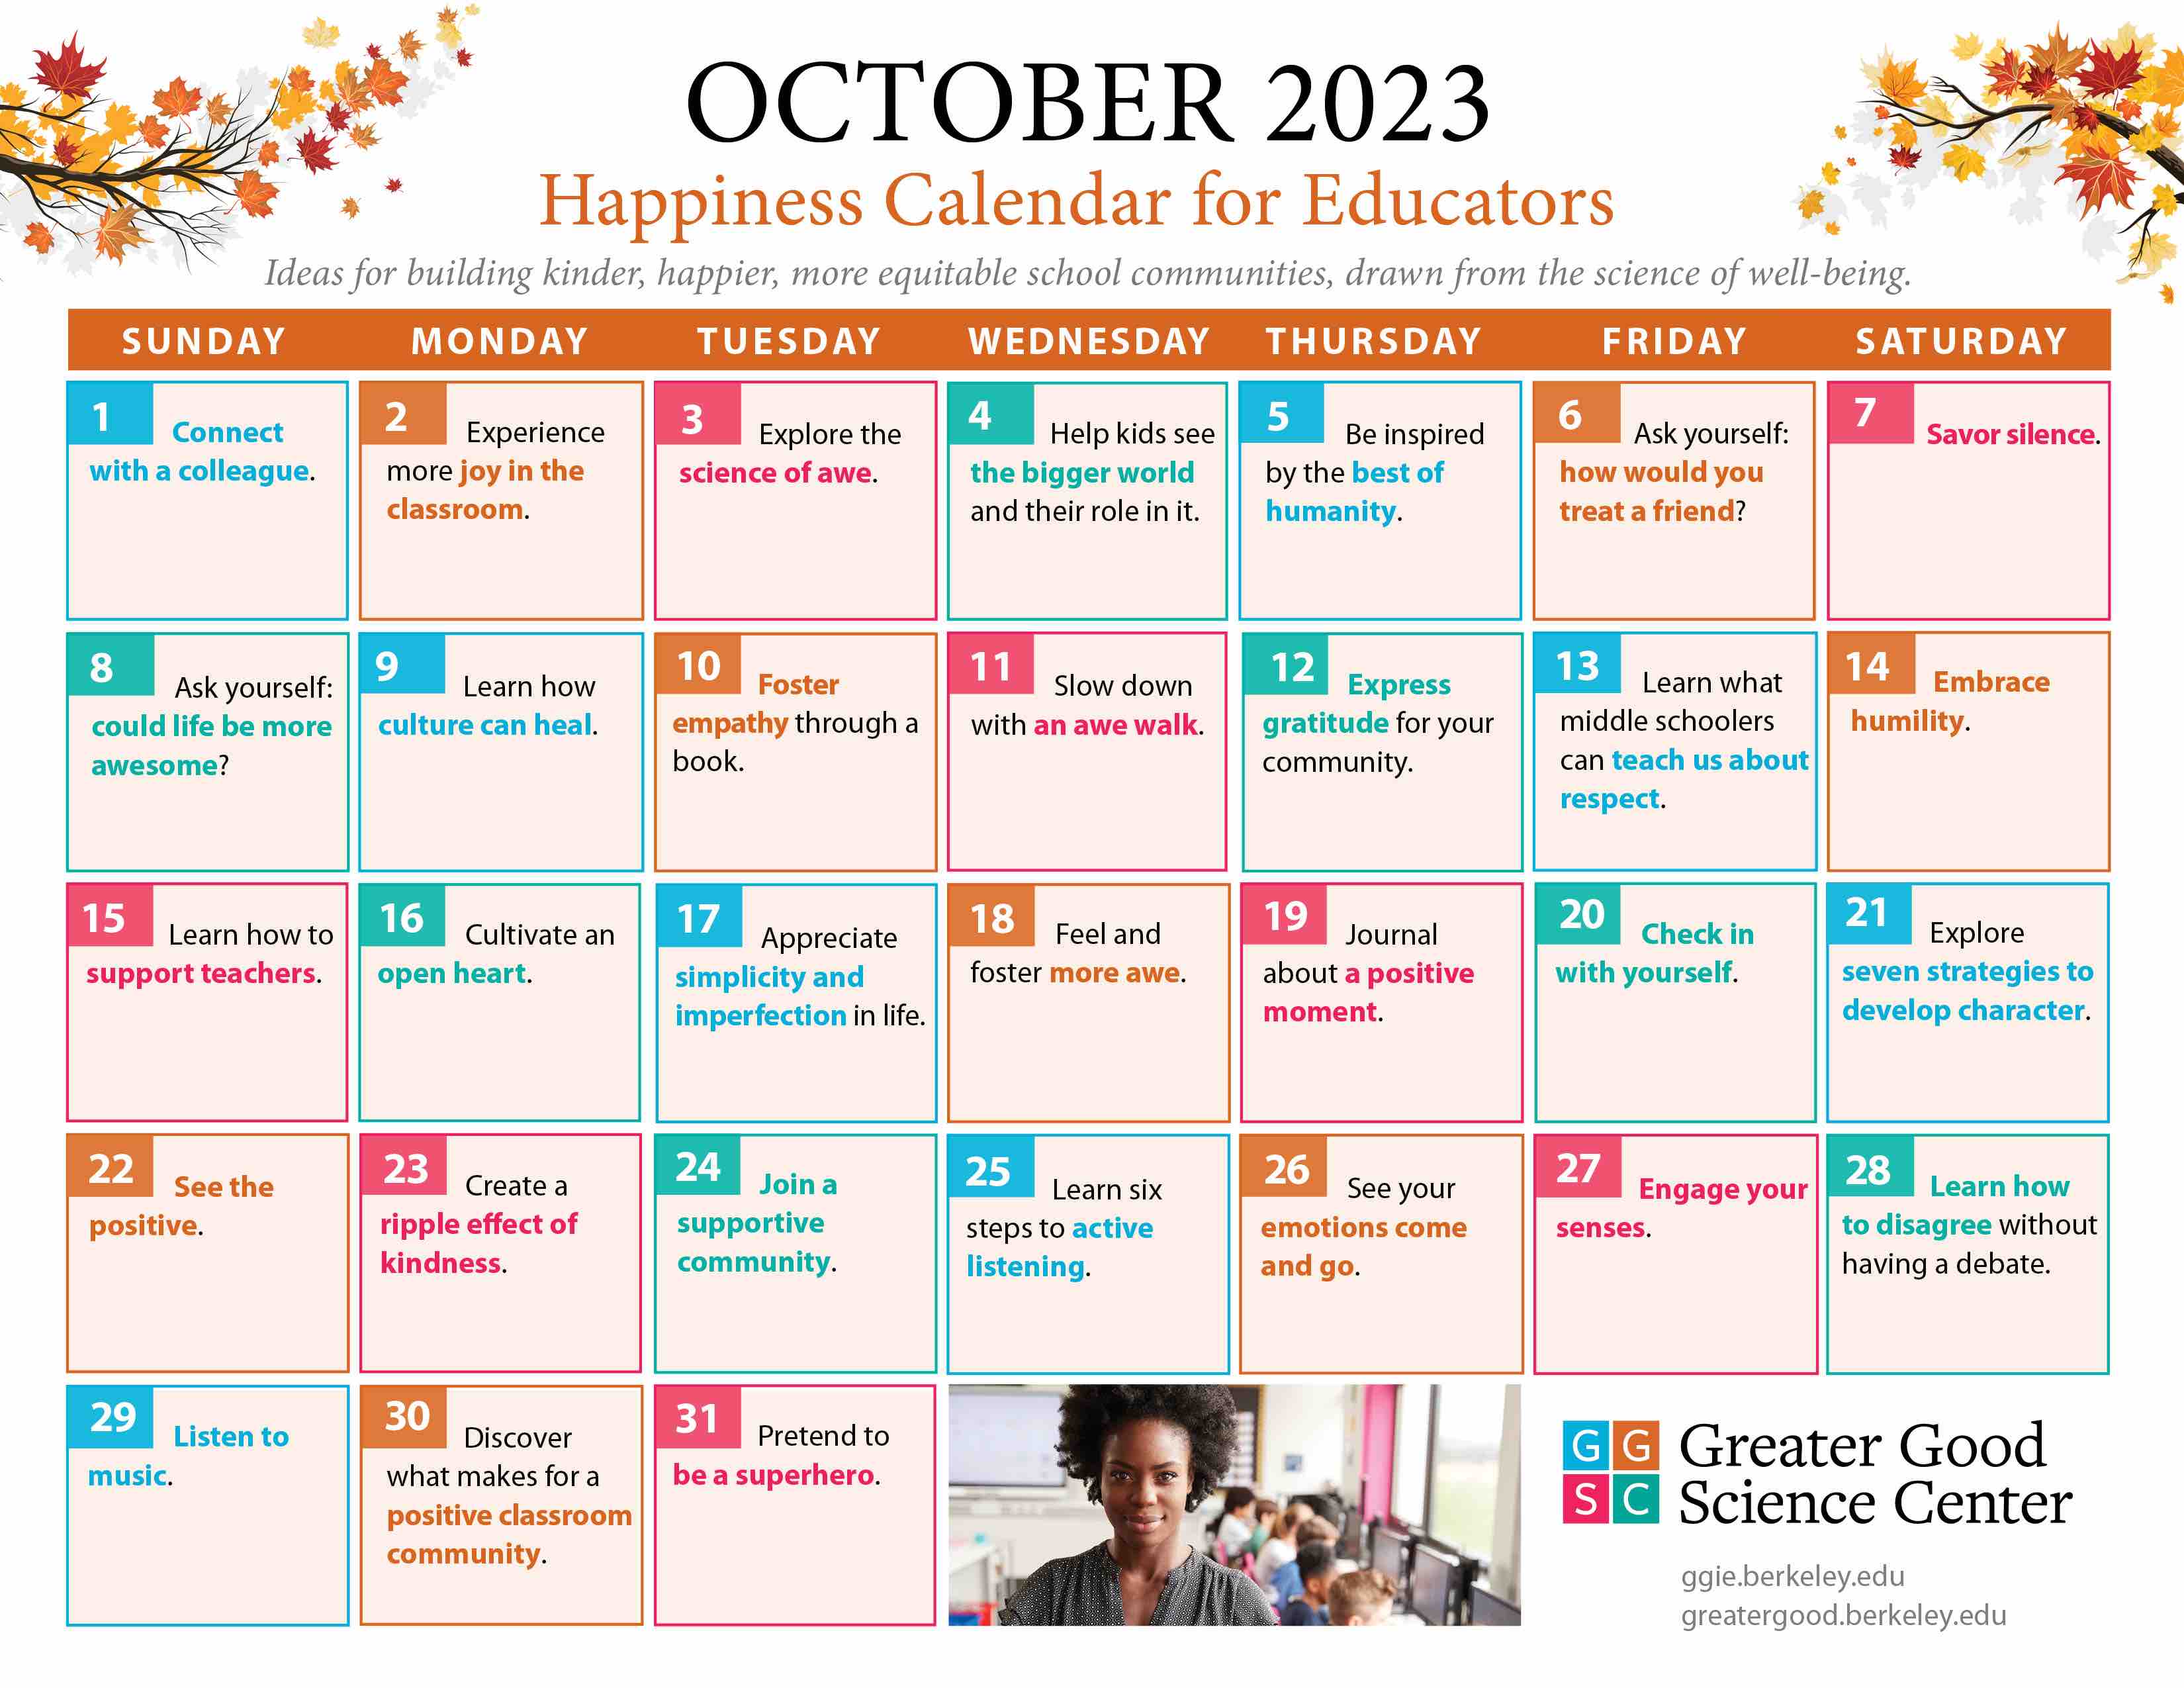 October 2023 happiness calendar for educators